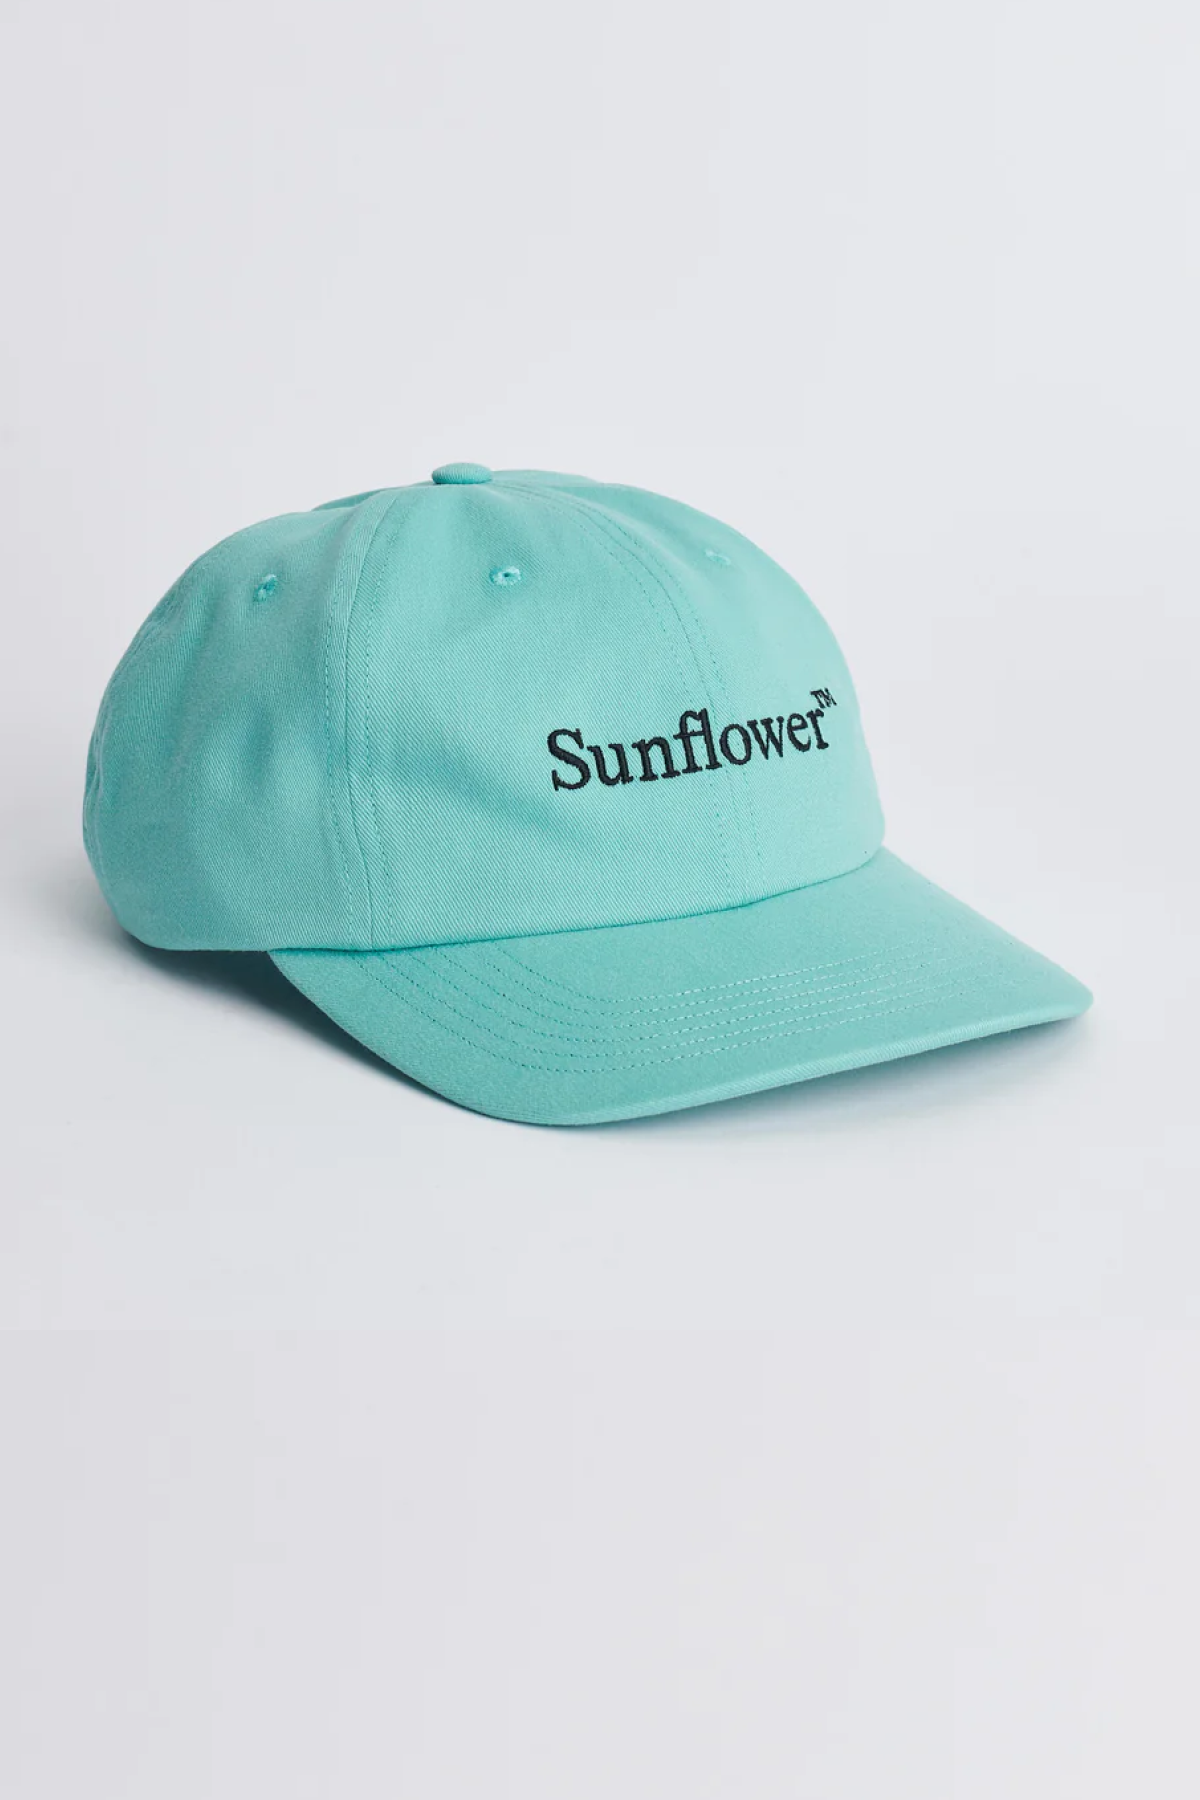 Sunflower Dad Cap - Mint